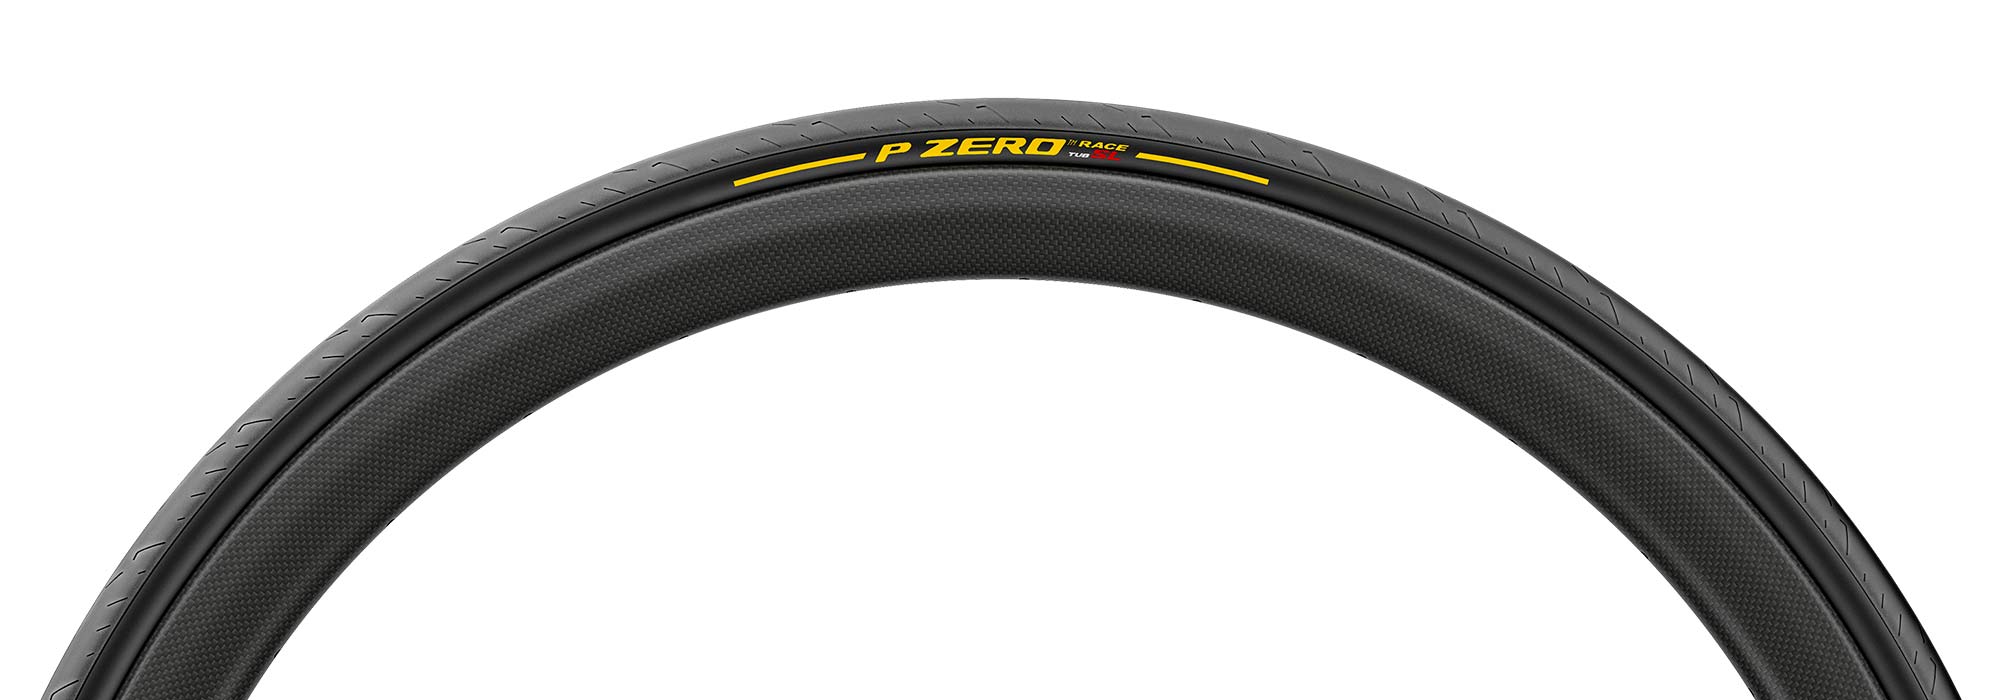 Pirelli P Zero Race Tub SL tubular road race tire